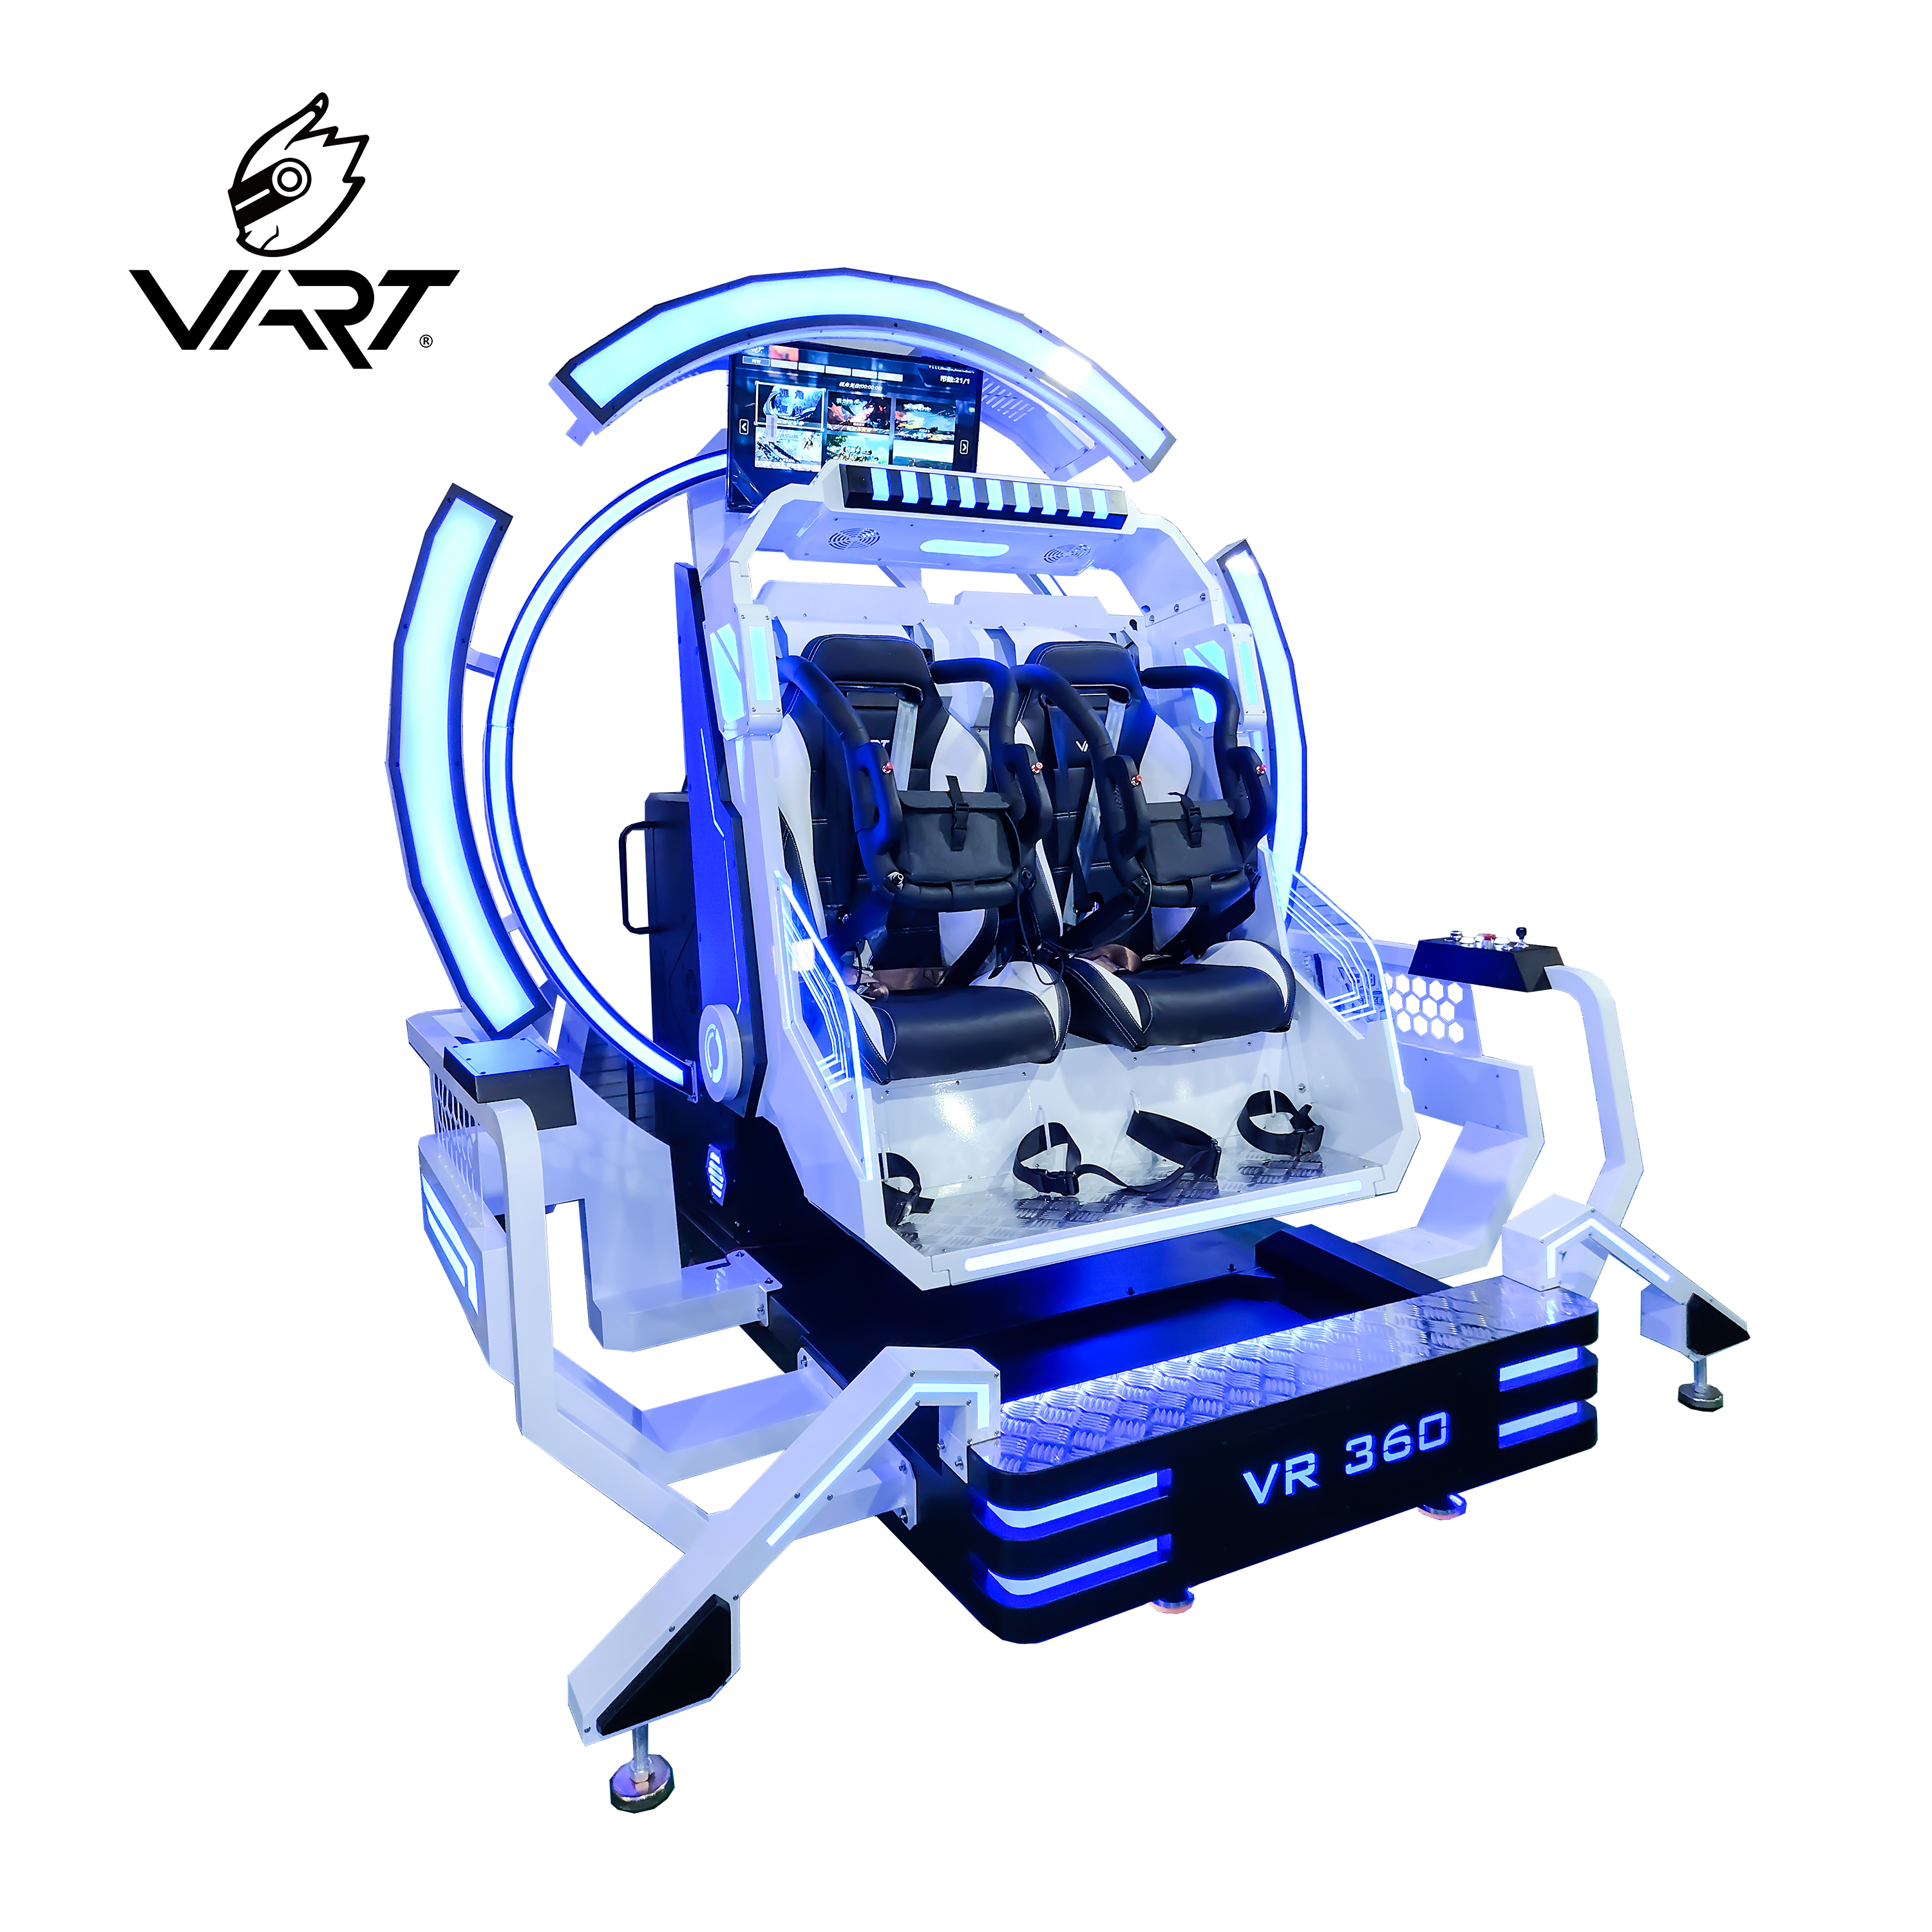 VART 2 ਸੀਟਰ VR 360 ਚੇਅਰ ਫੀਚਰਡ ਚਿੱਤਰ